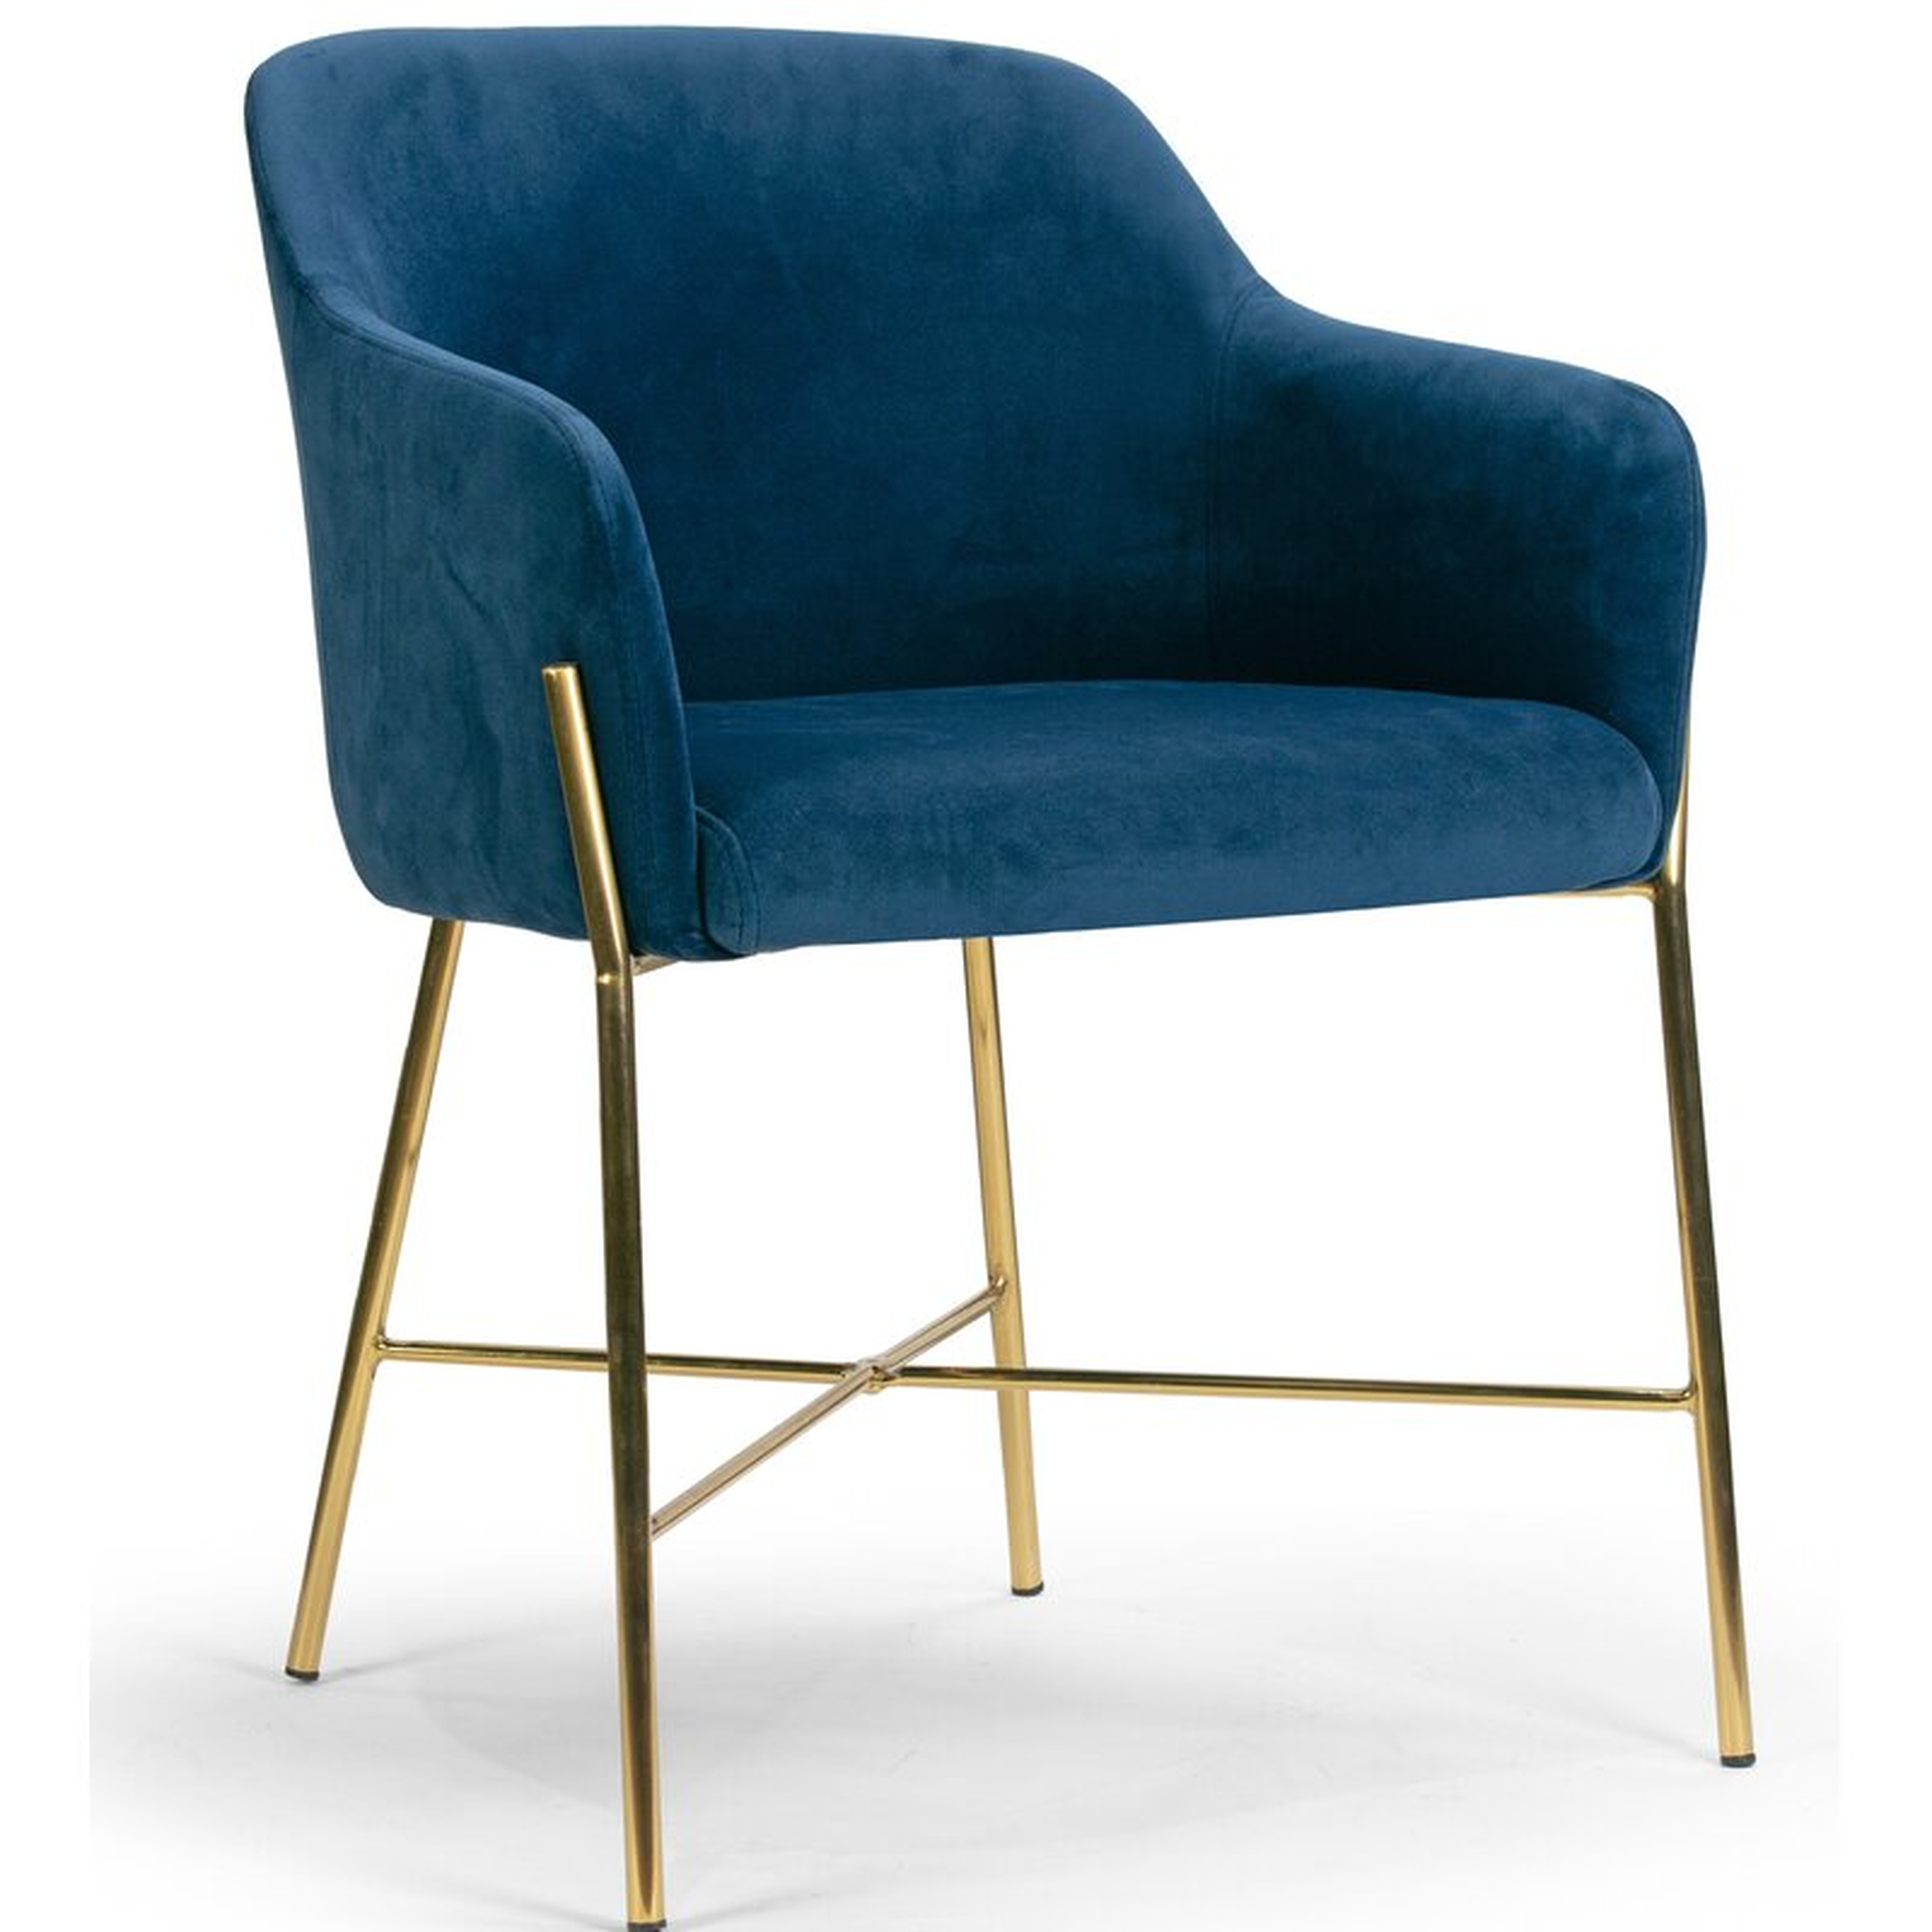 Vergas Upholstered Dining Chair - Wayfair